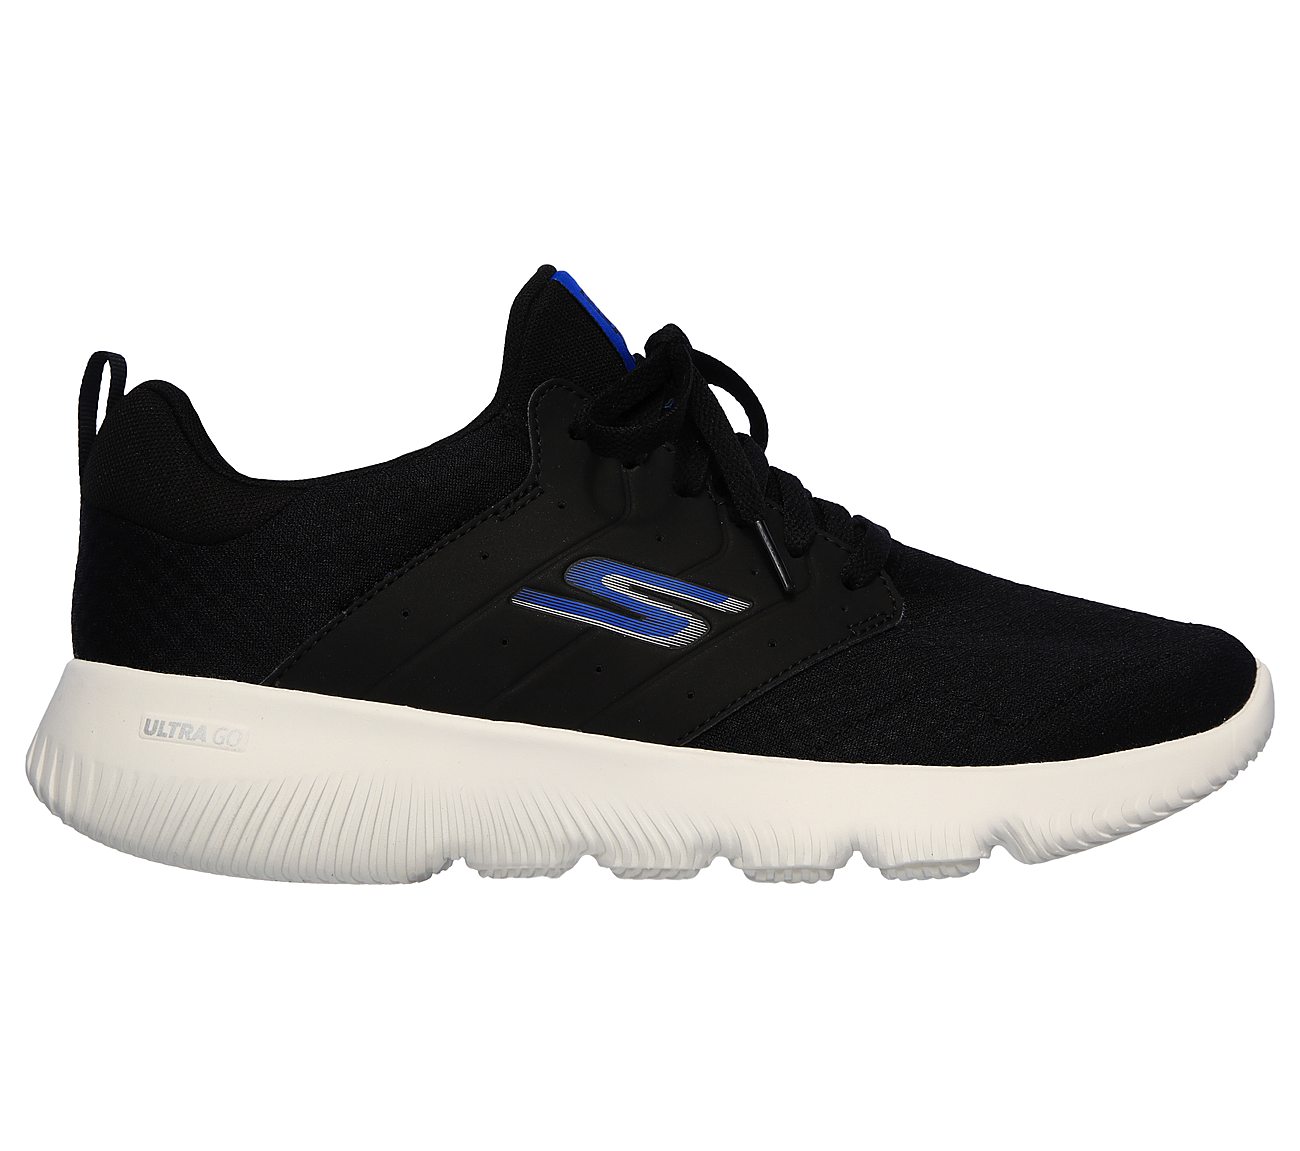 GO RUN FOCUS-LIMIT, BLACK/BLUE Footwear Right View